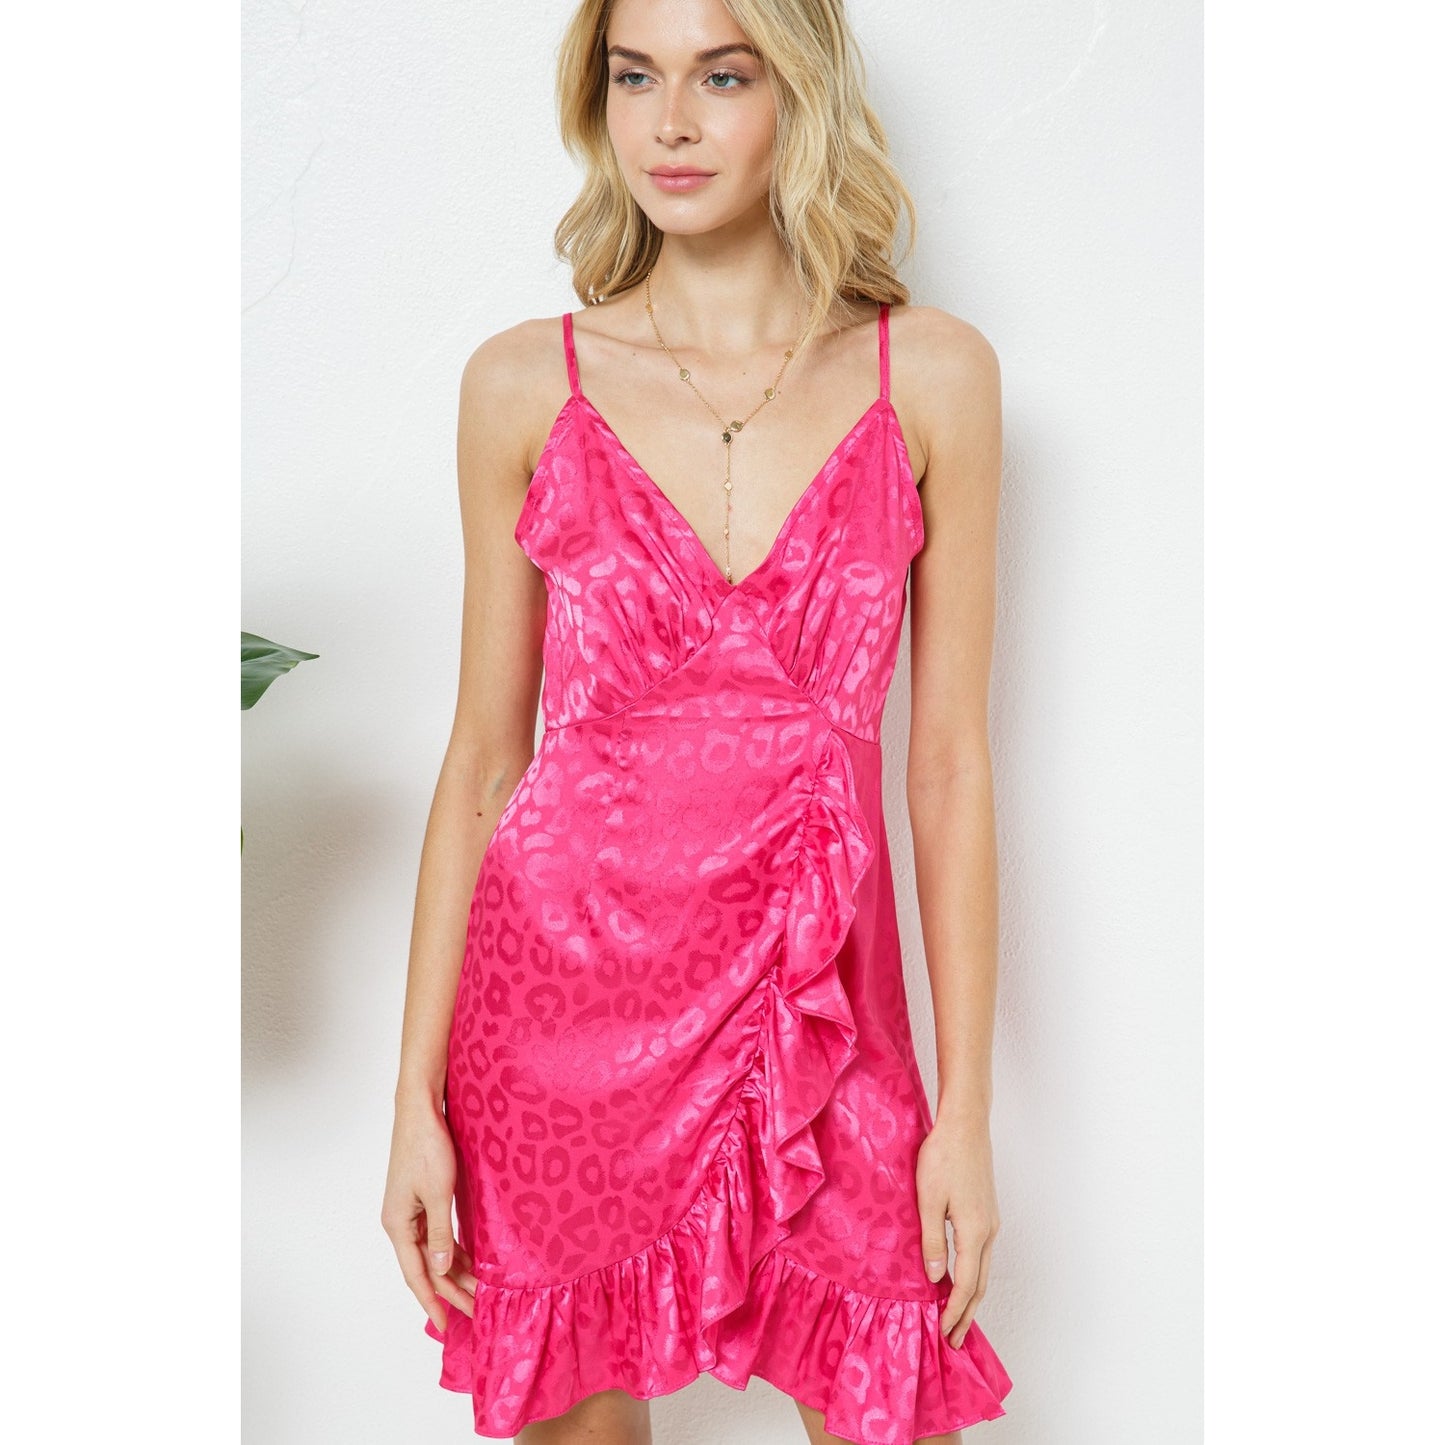 Hot Pink Cheetah Mini Dress